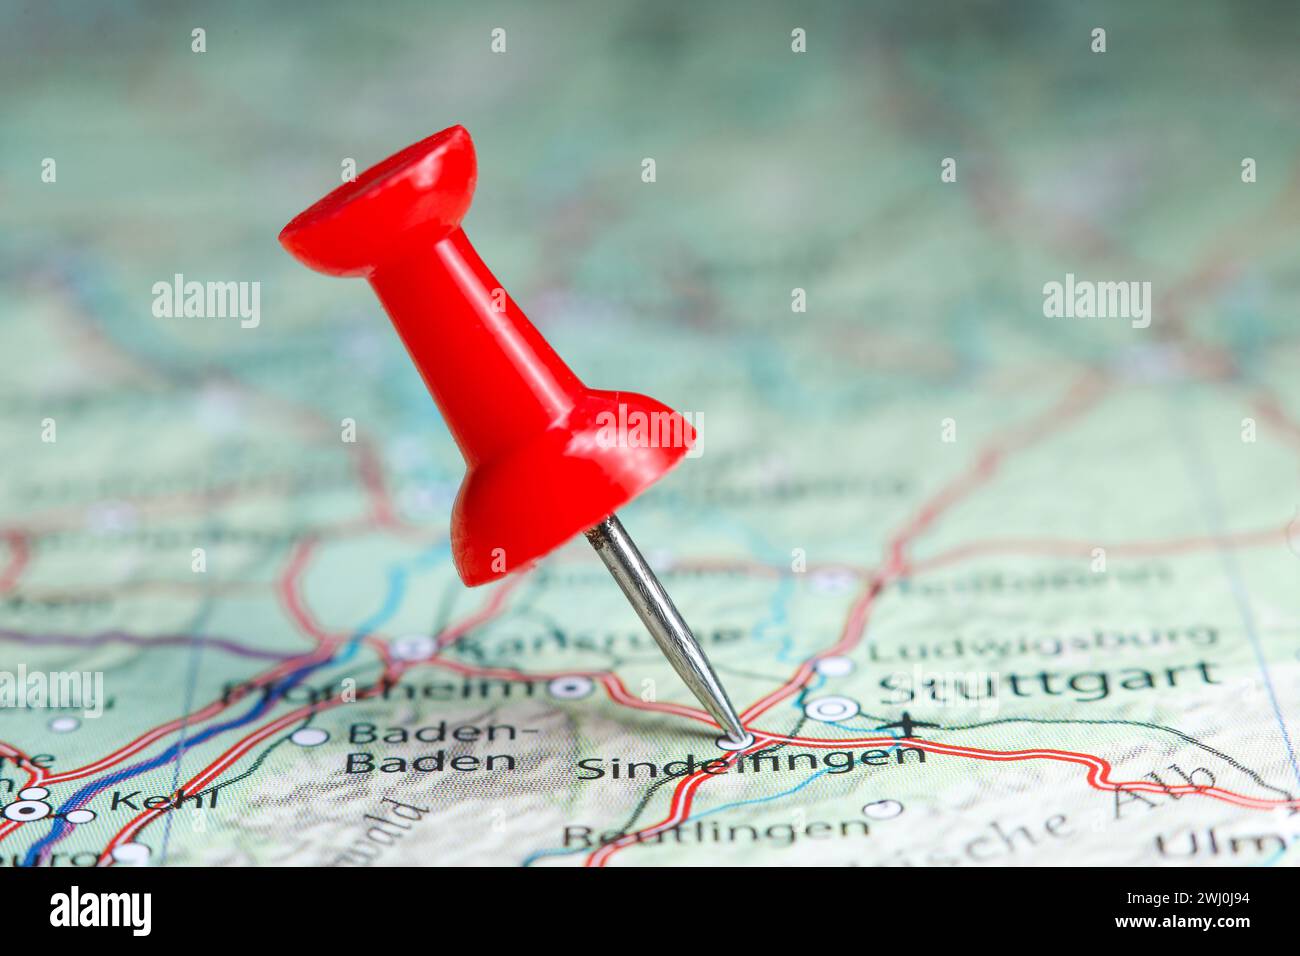 Sindelfingen pin on map of Germany Stock Photo